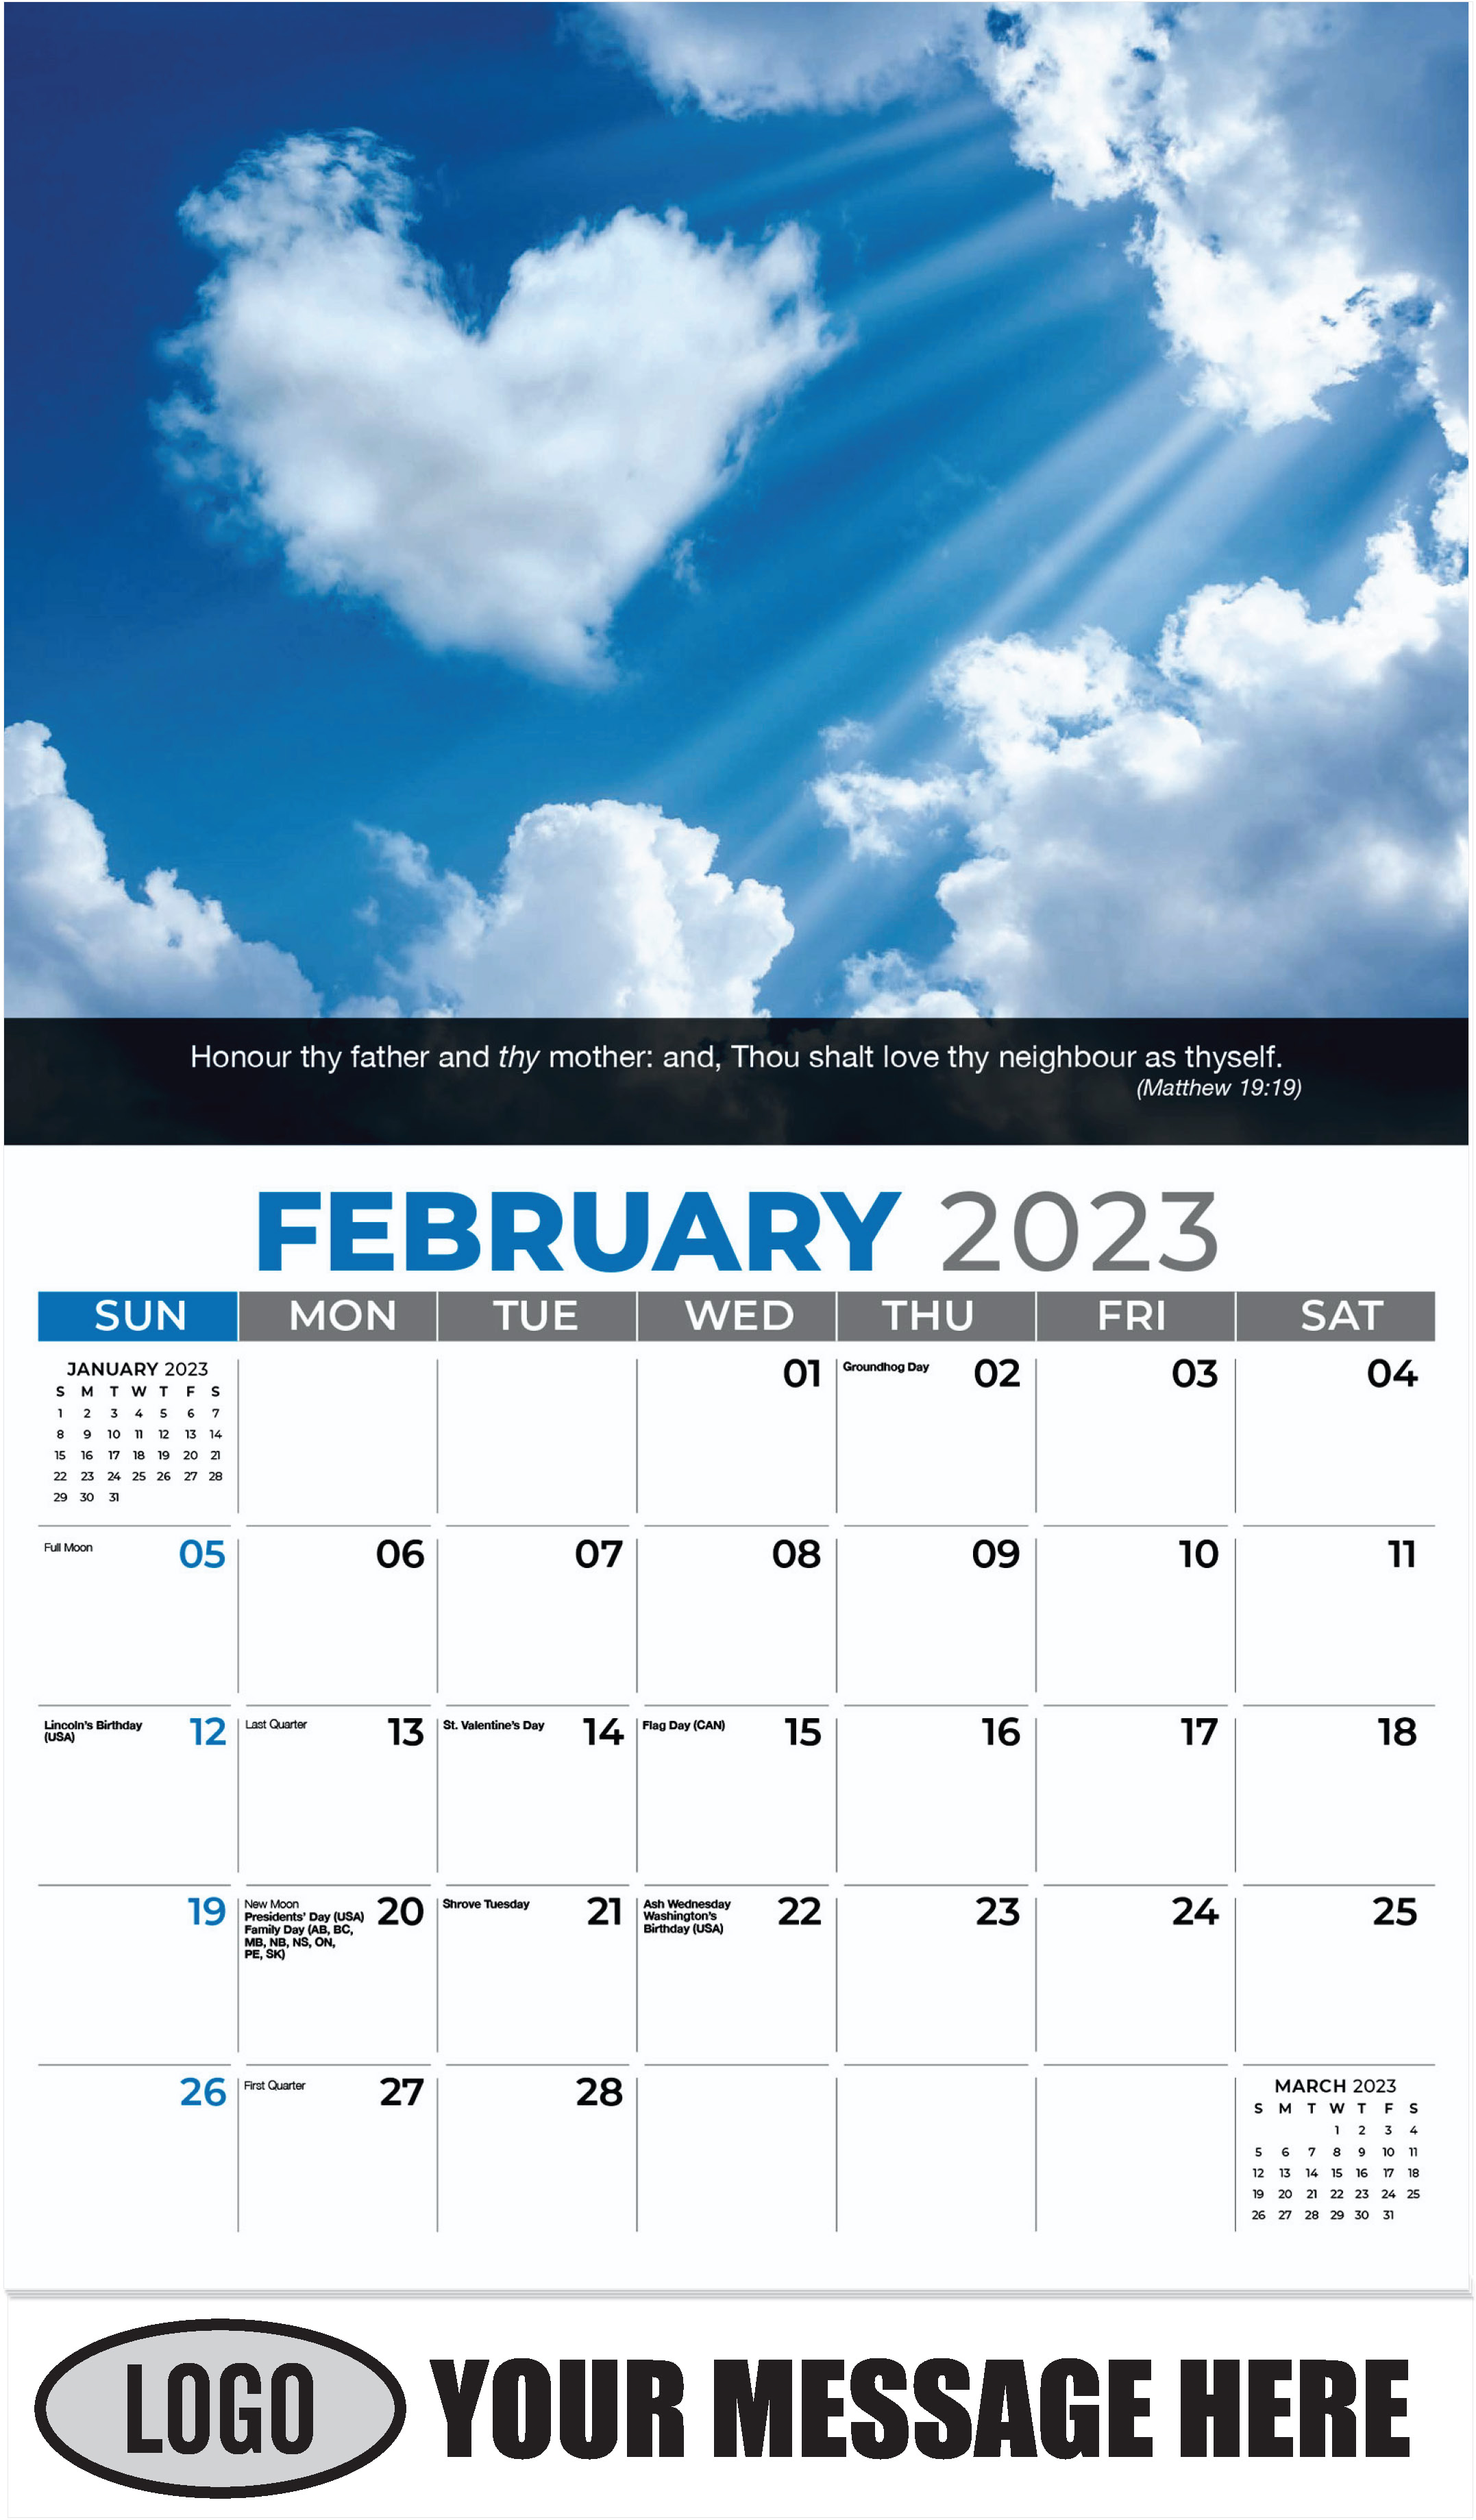 Heart in Sky - February - Faith Passages 2023 Promotional Calendar